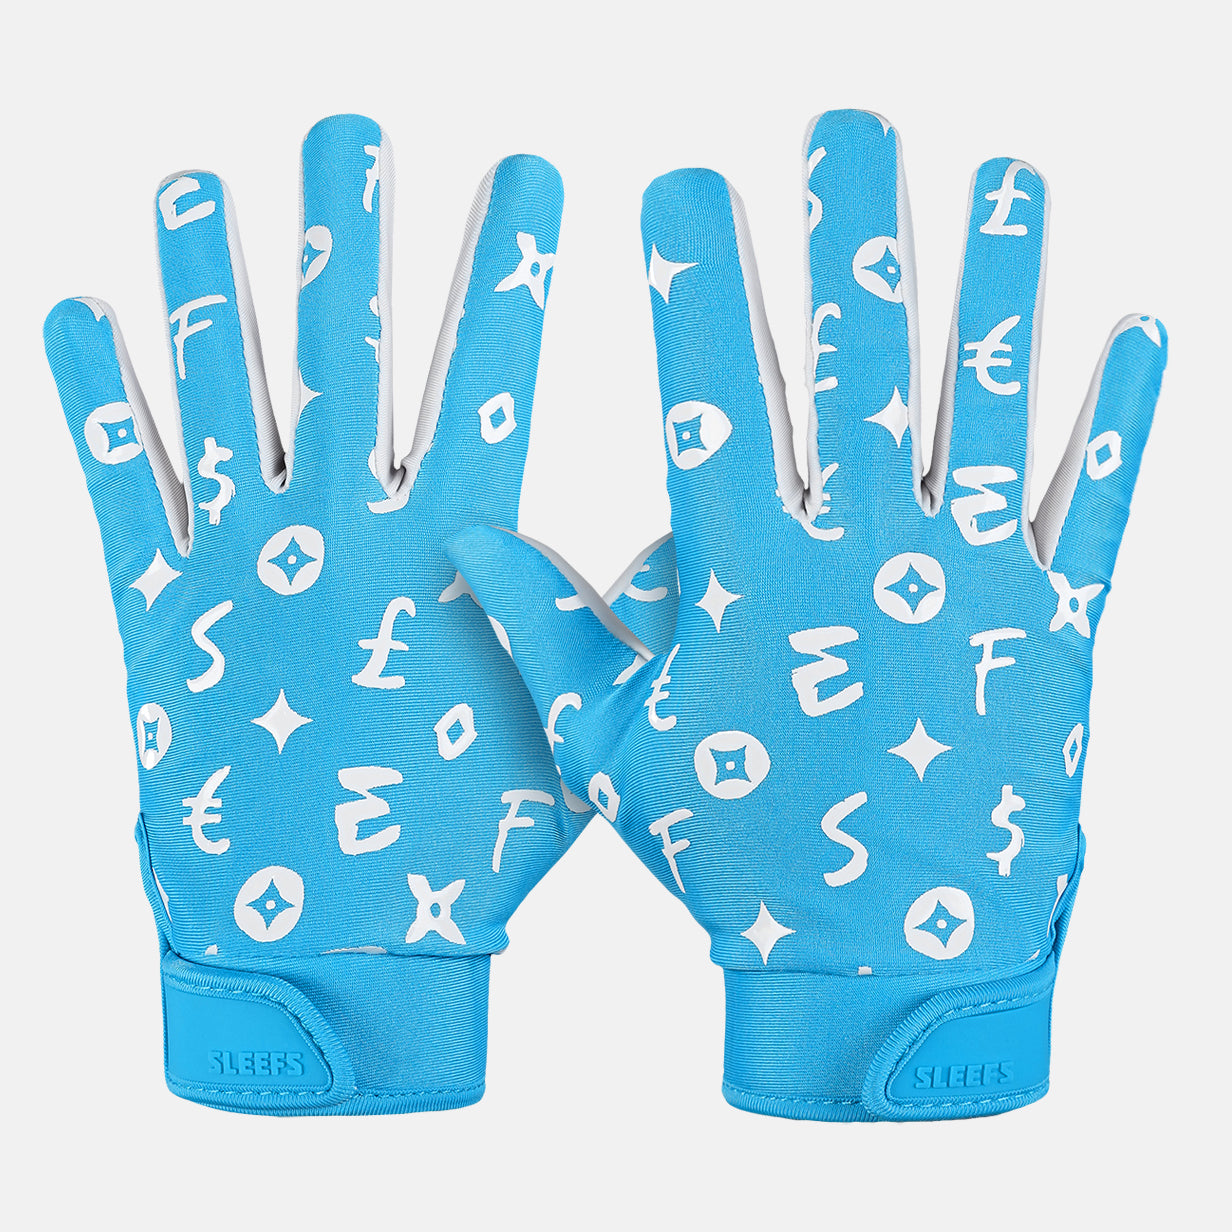 Sleefs Lavish Sky Blue Sticky Football Receiver Gloves